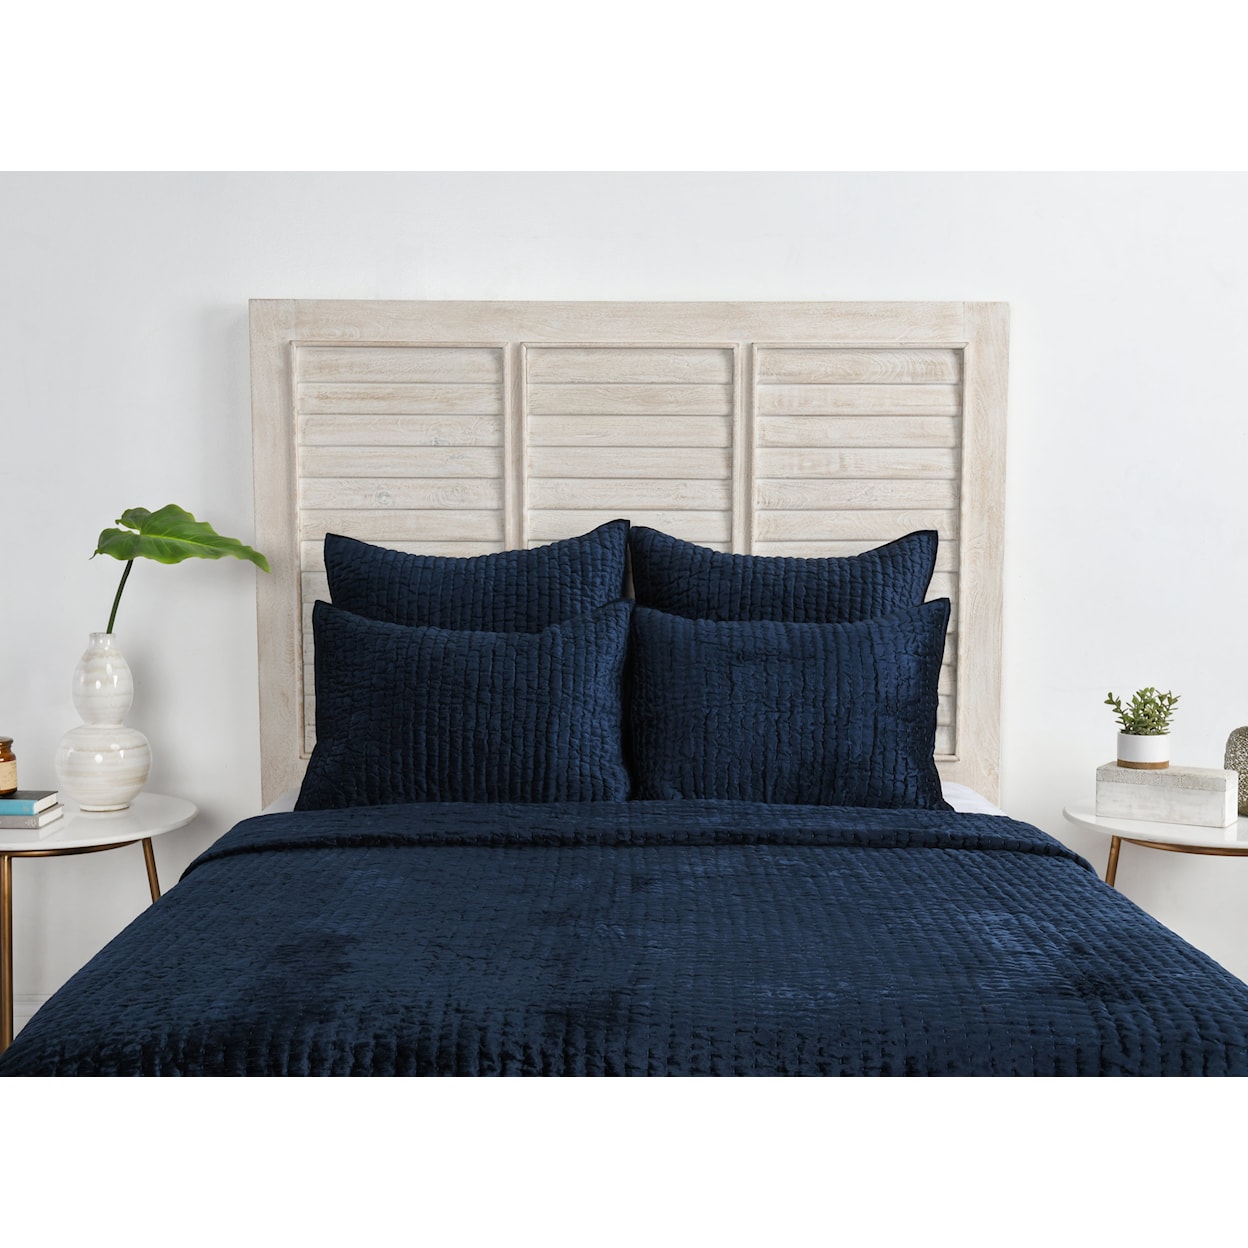 Classic Home Bedding BARI VELVET OCEAN BLUE 3 PC QUEEN QUILT SET